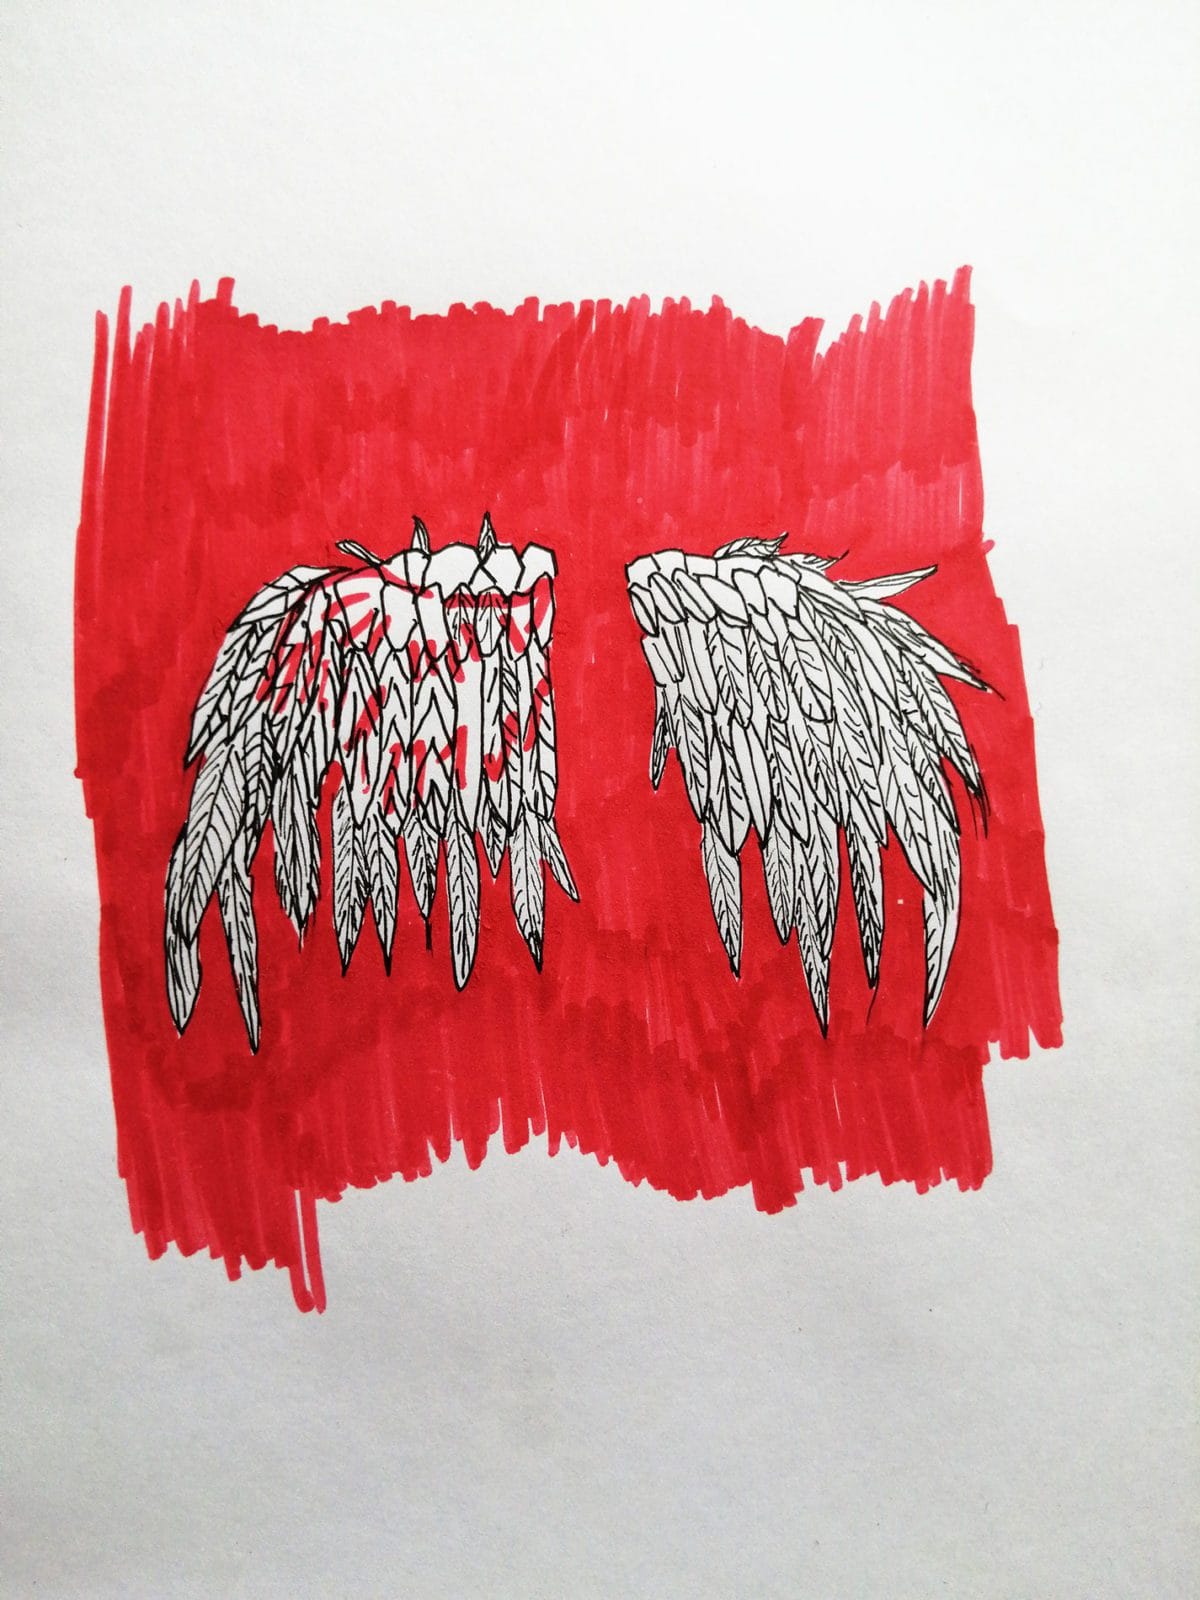 Old wings